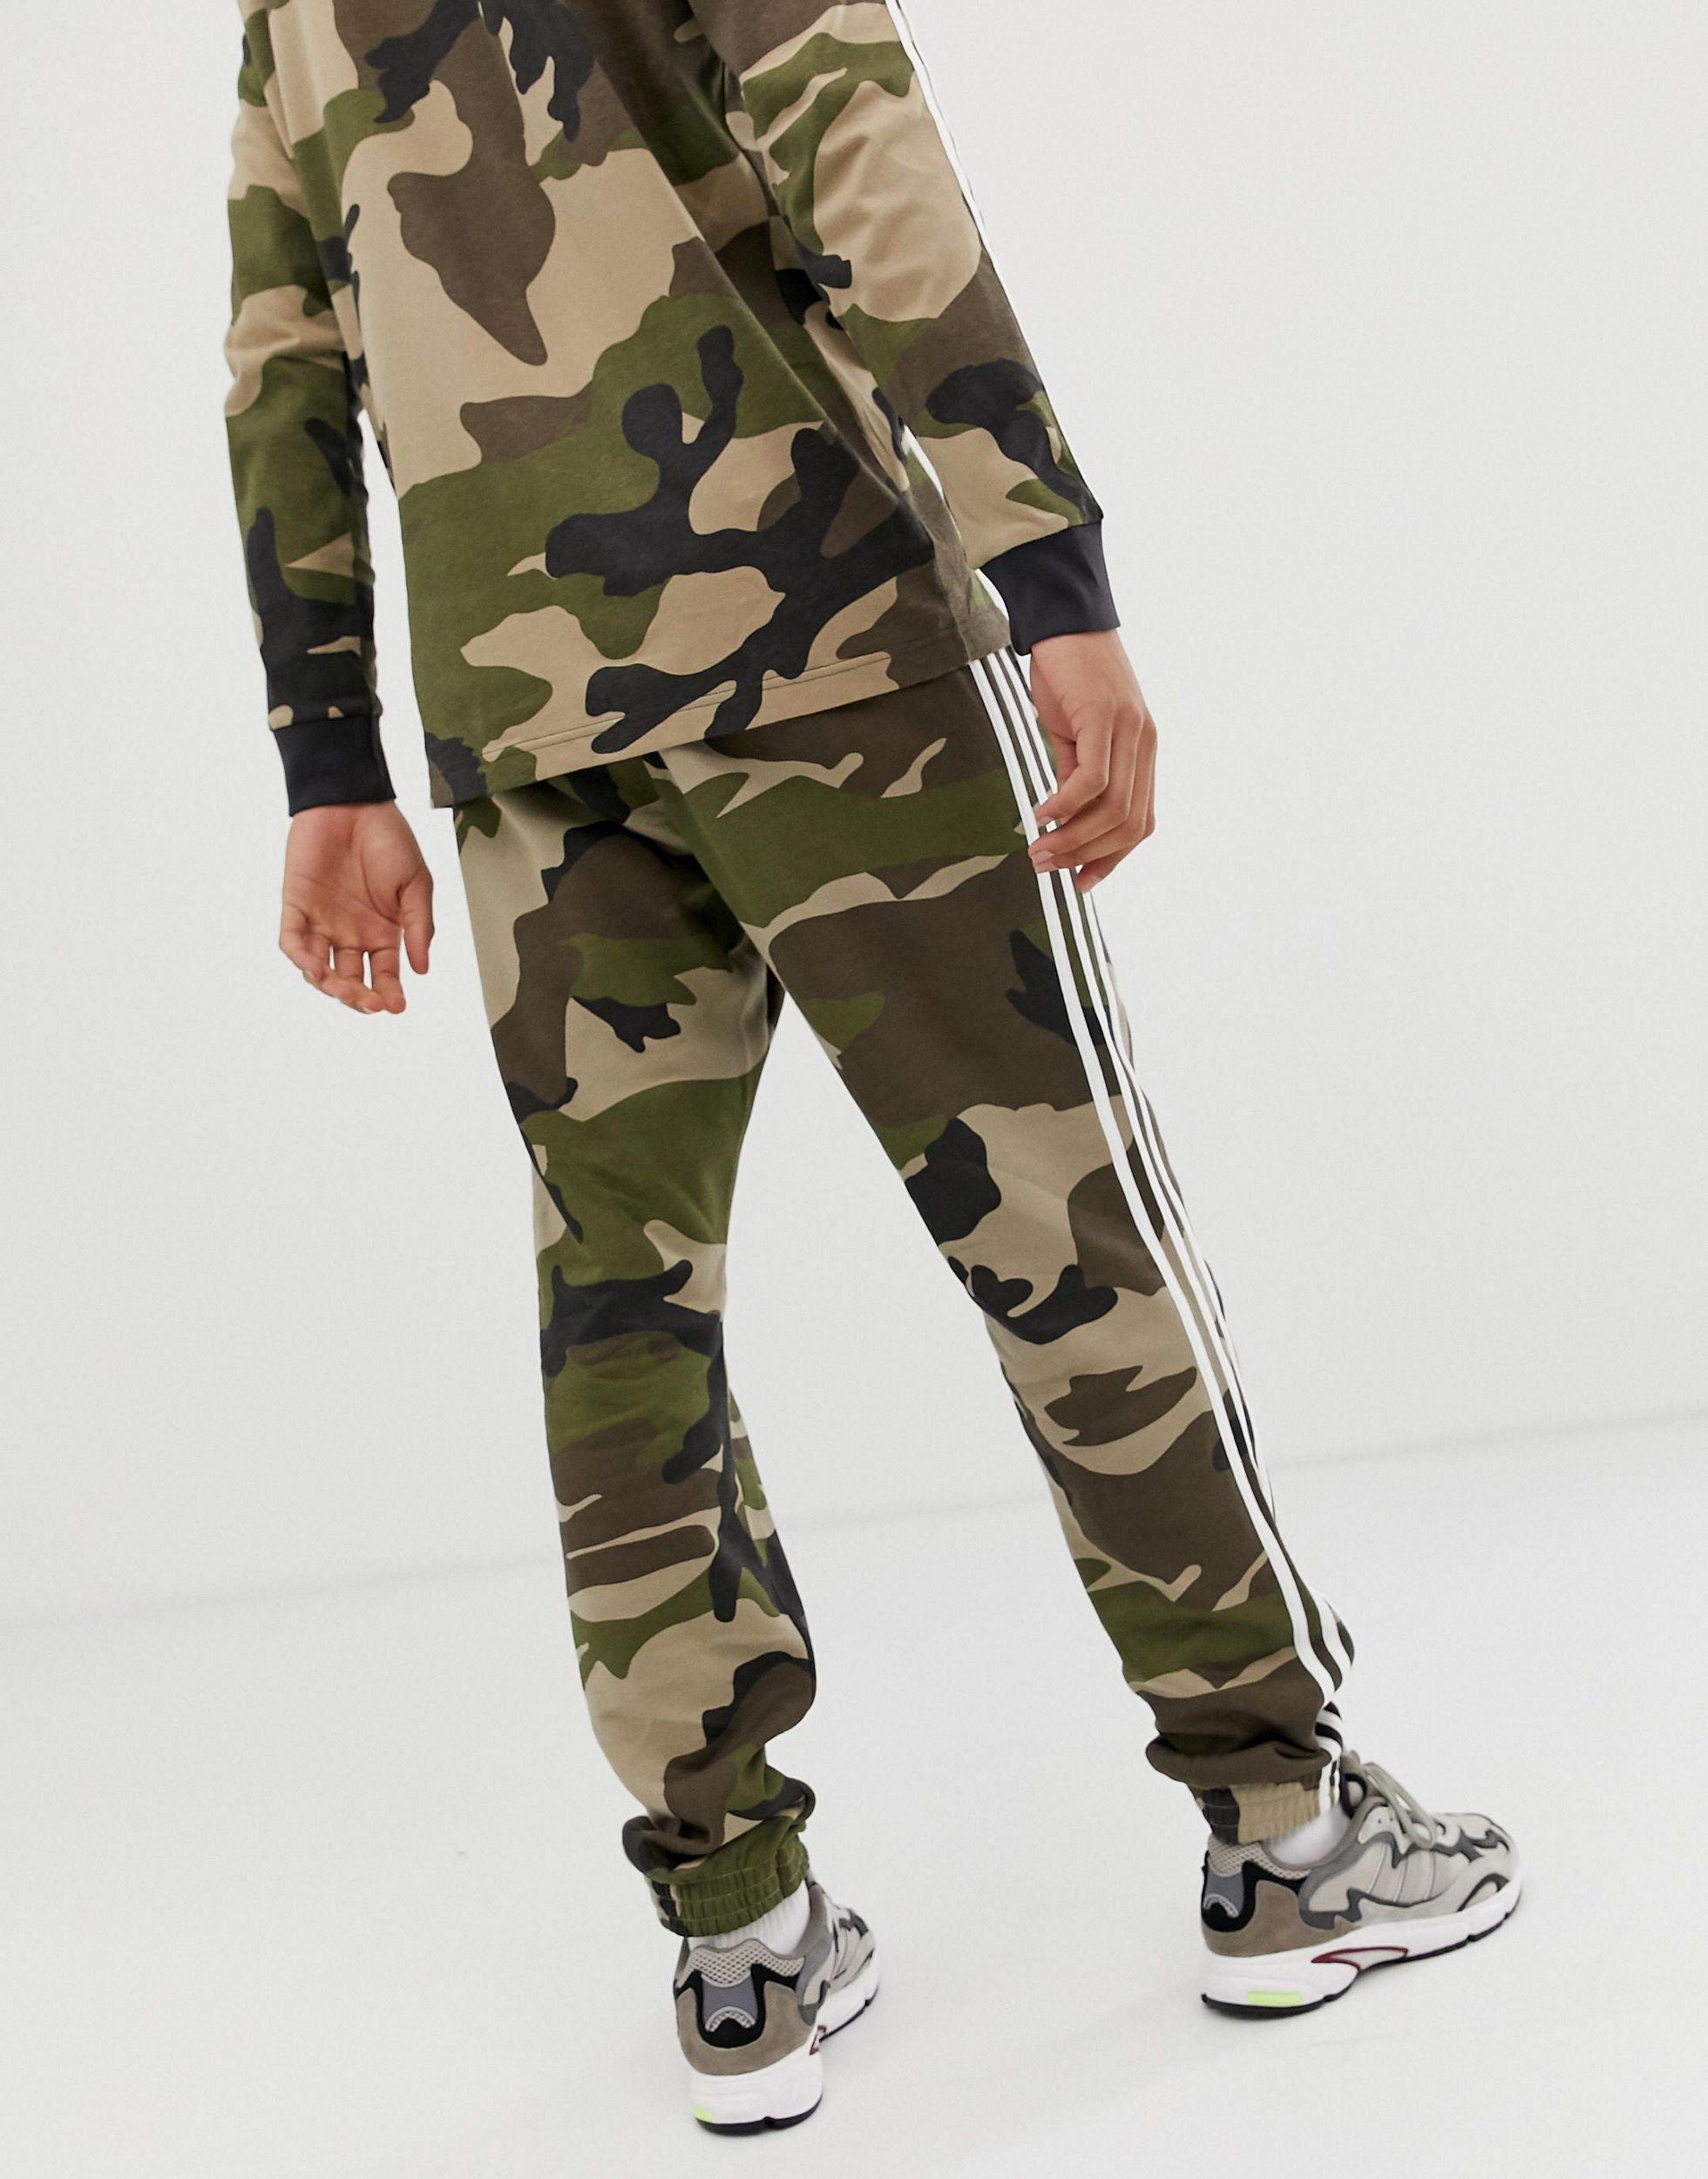 adidas Originals Cotton Camo joggers Dv2052 in Green for Men - Lyst